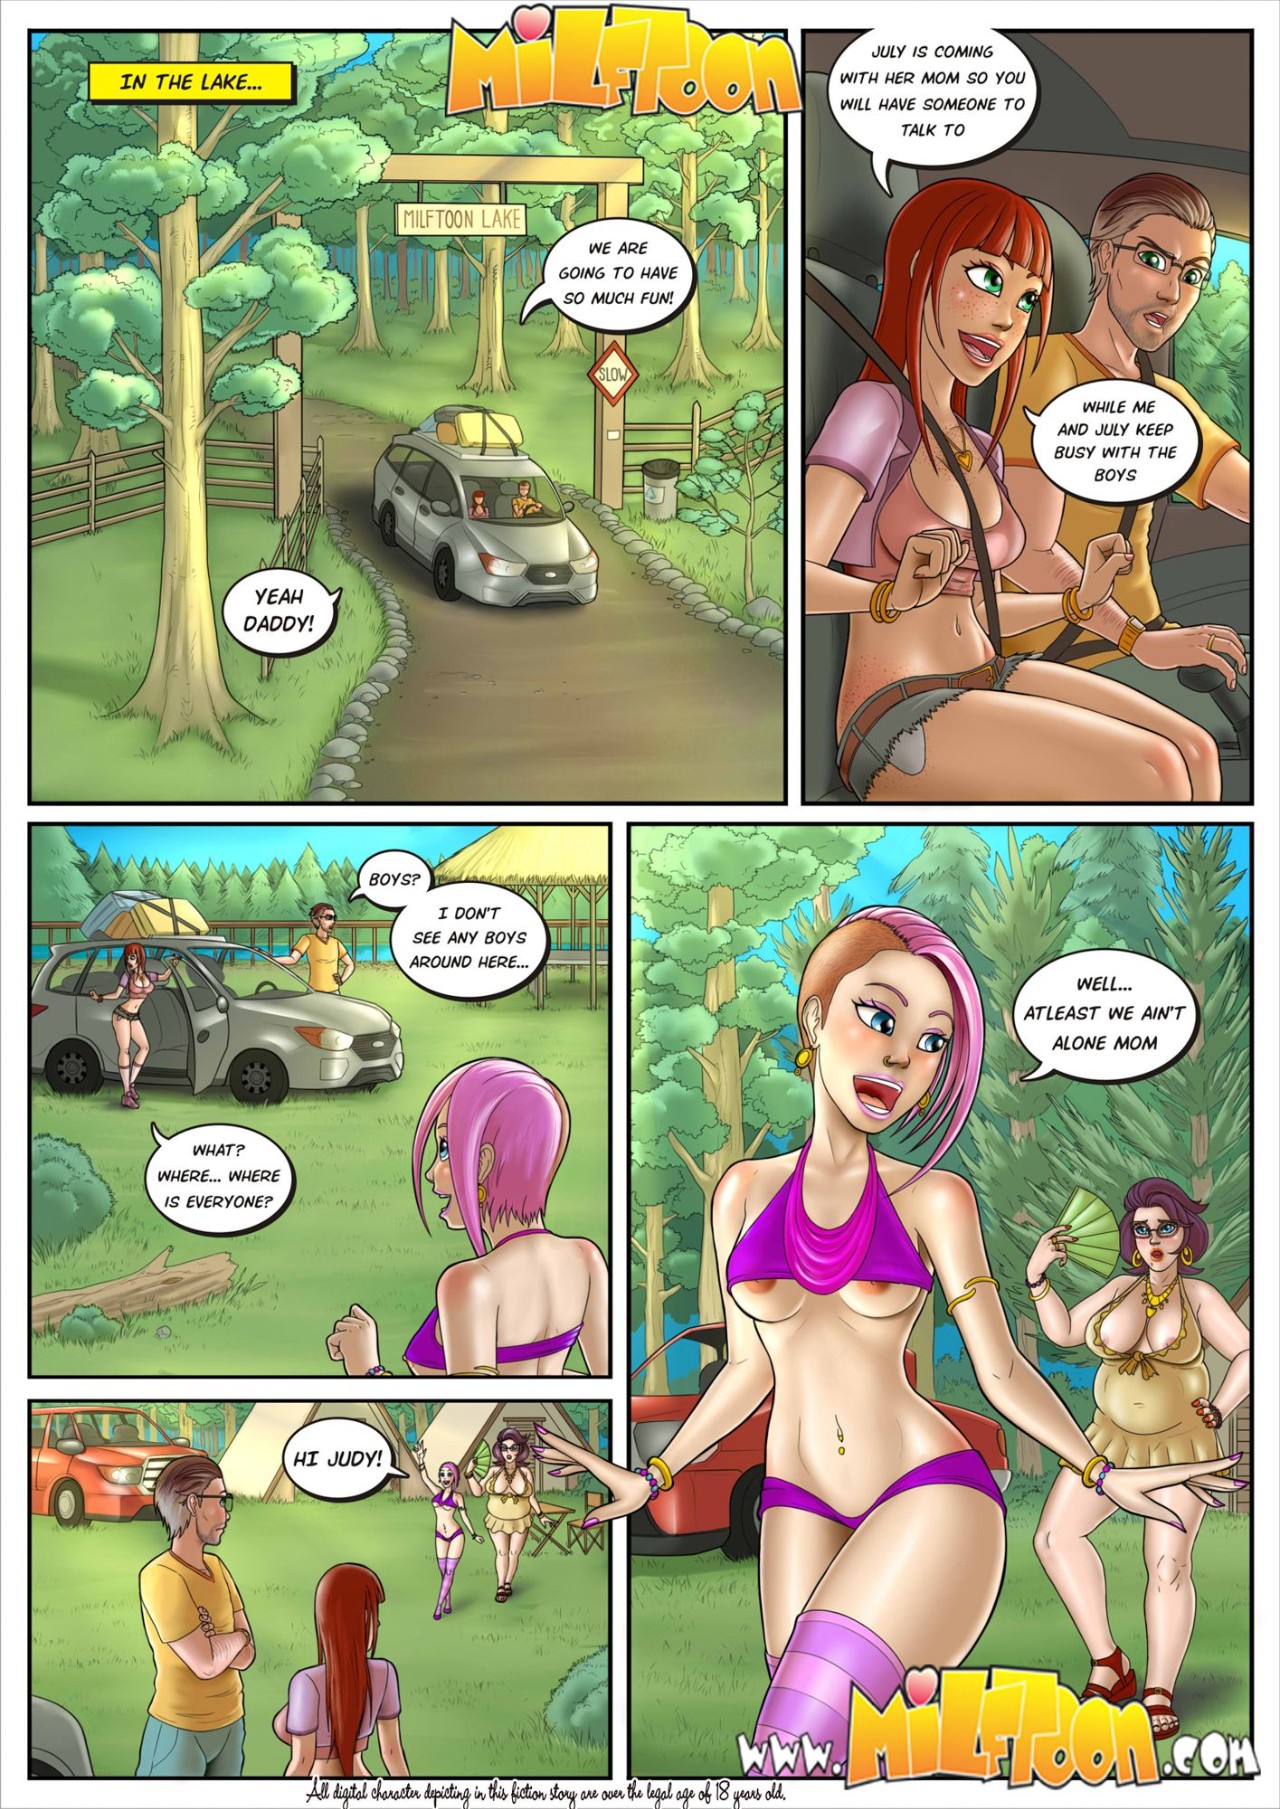 The Asschucks By MILFToon Part 2 Porn Comic english 01